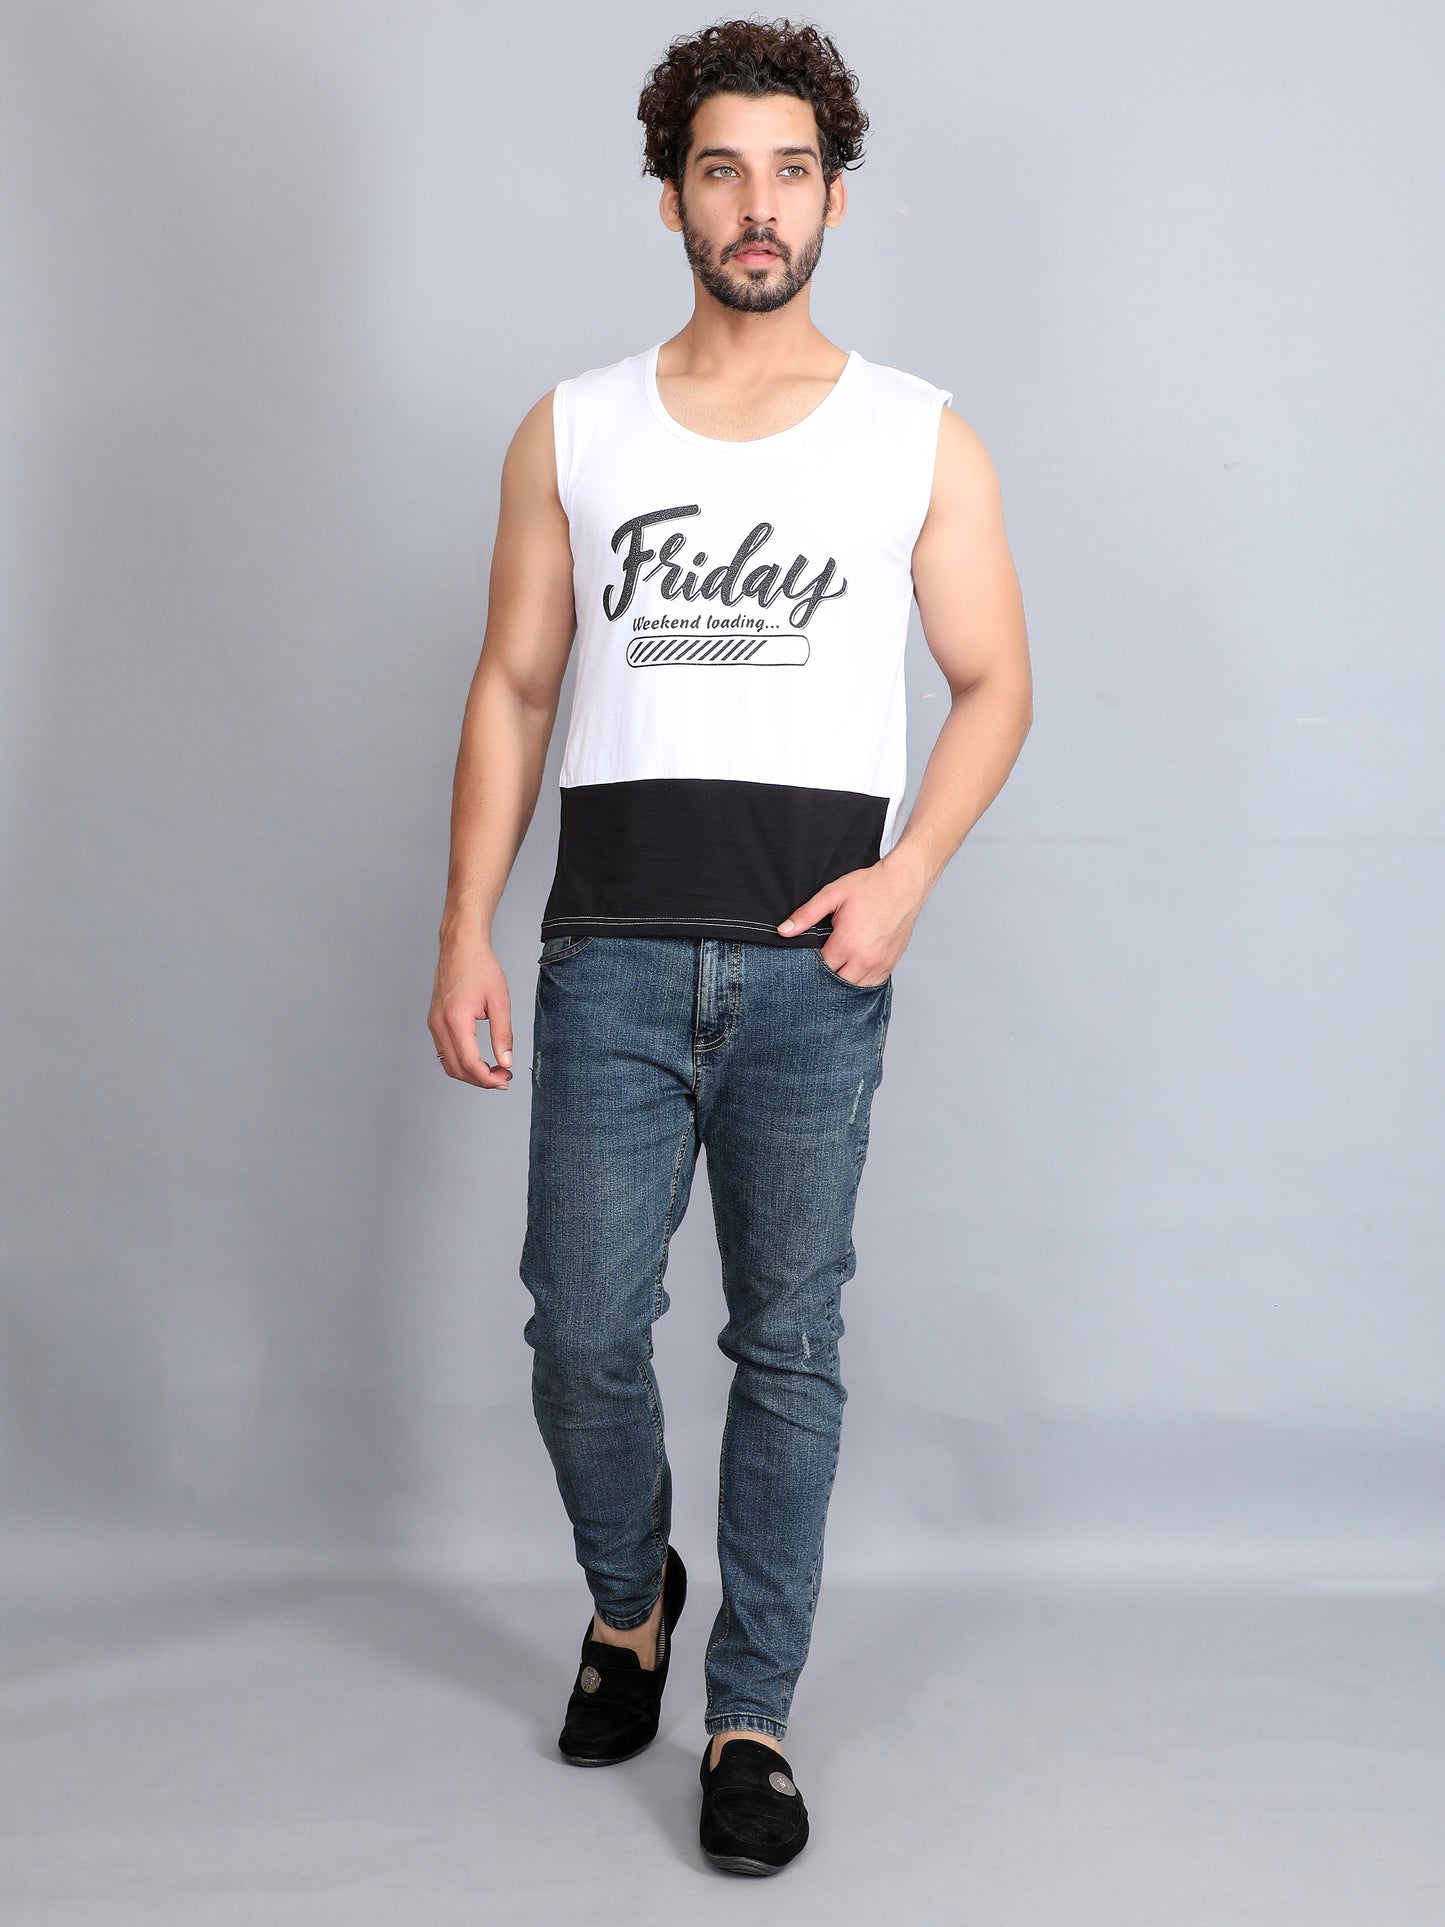 Men's Cotton Color Block Printed Sleeveless T-Shirt